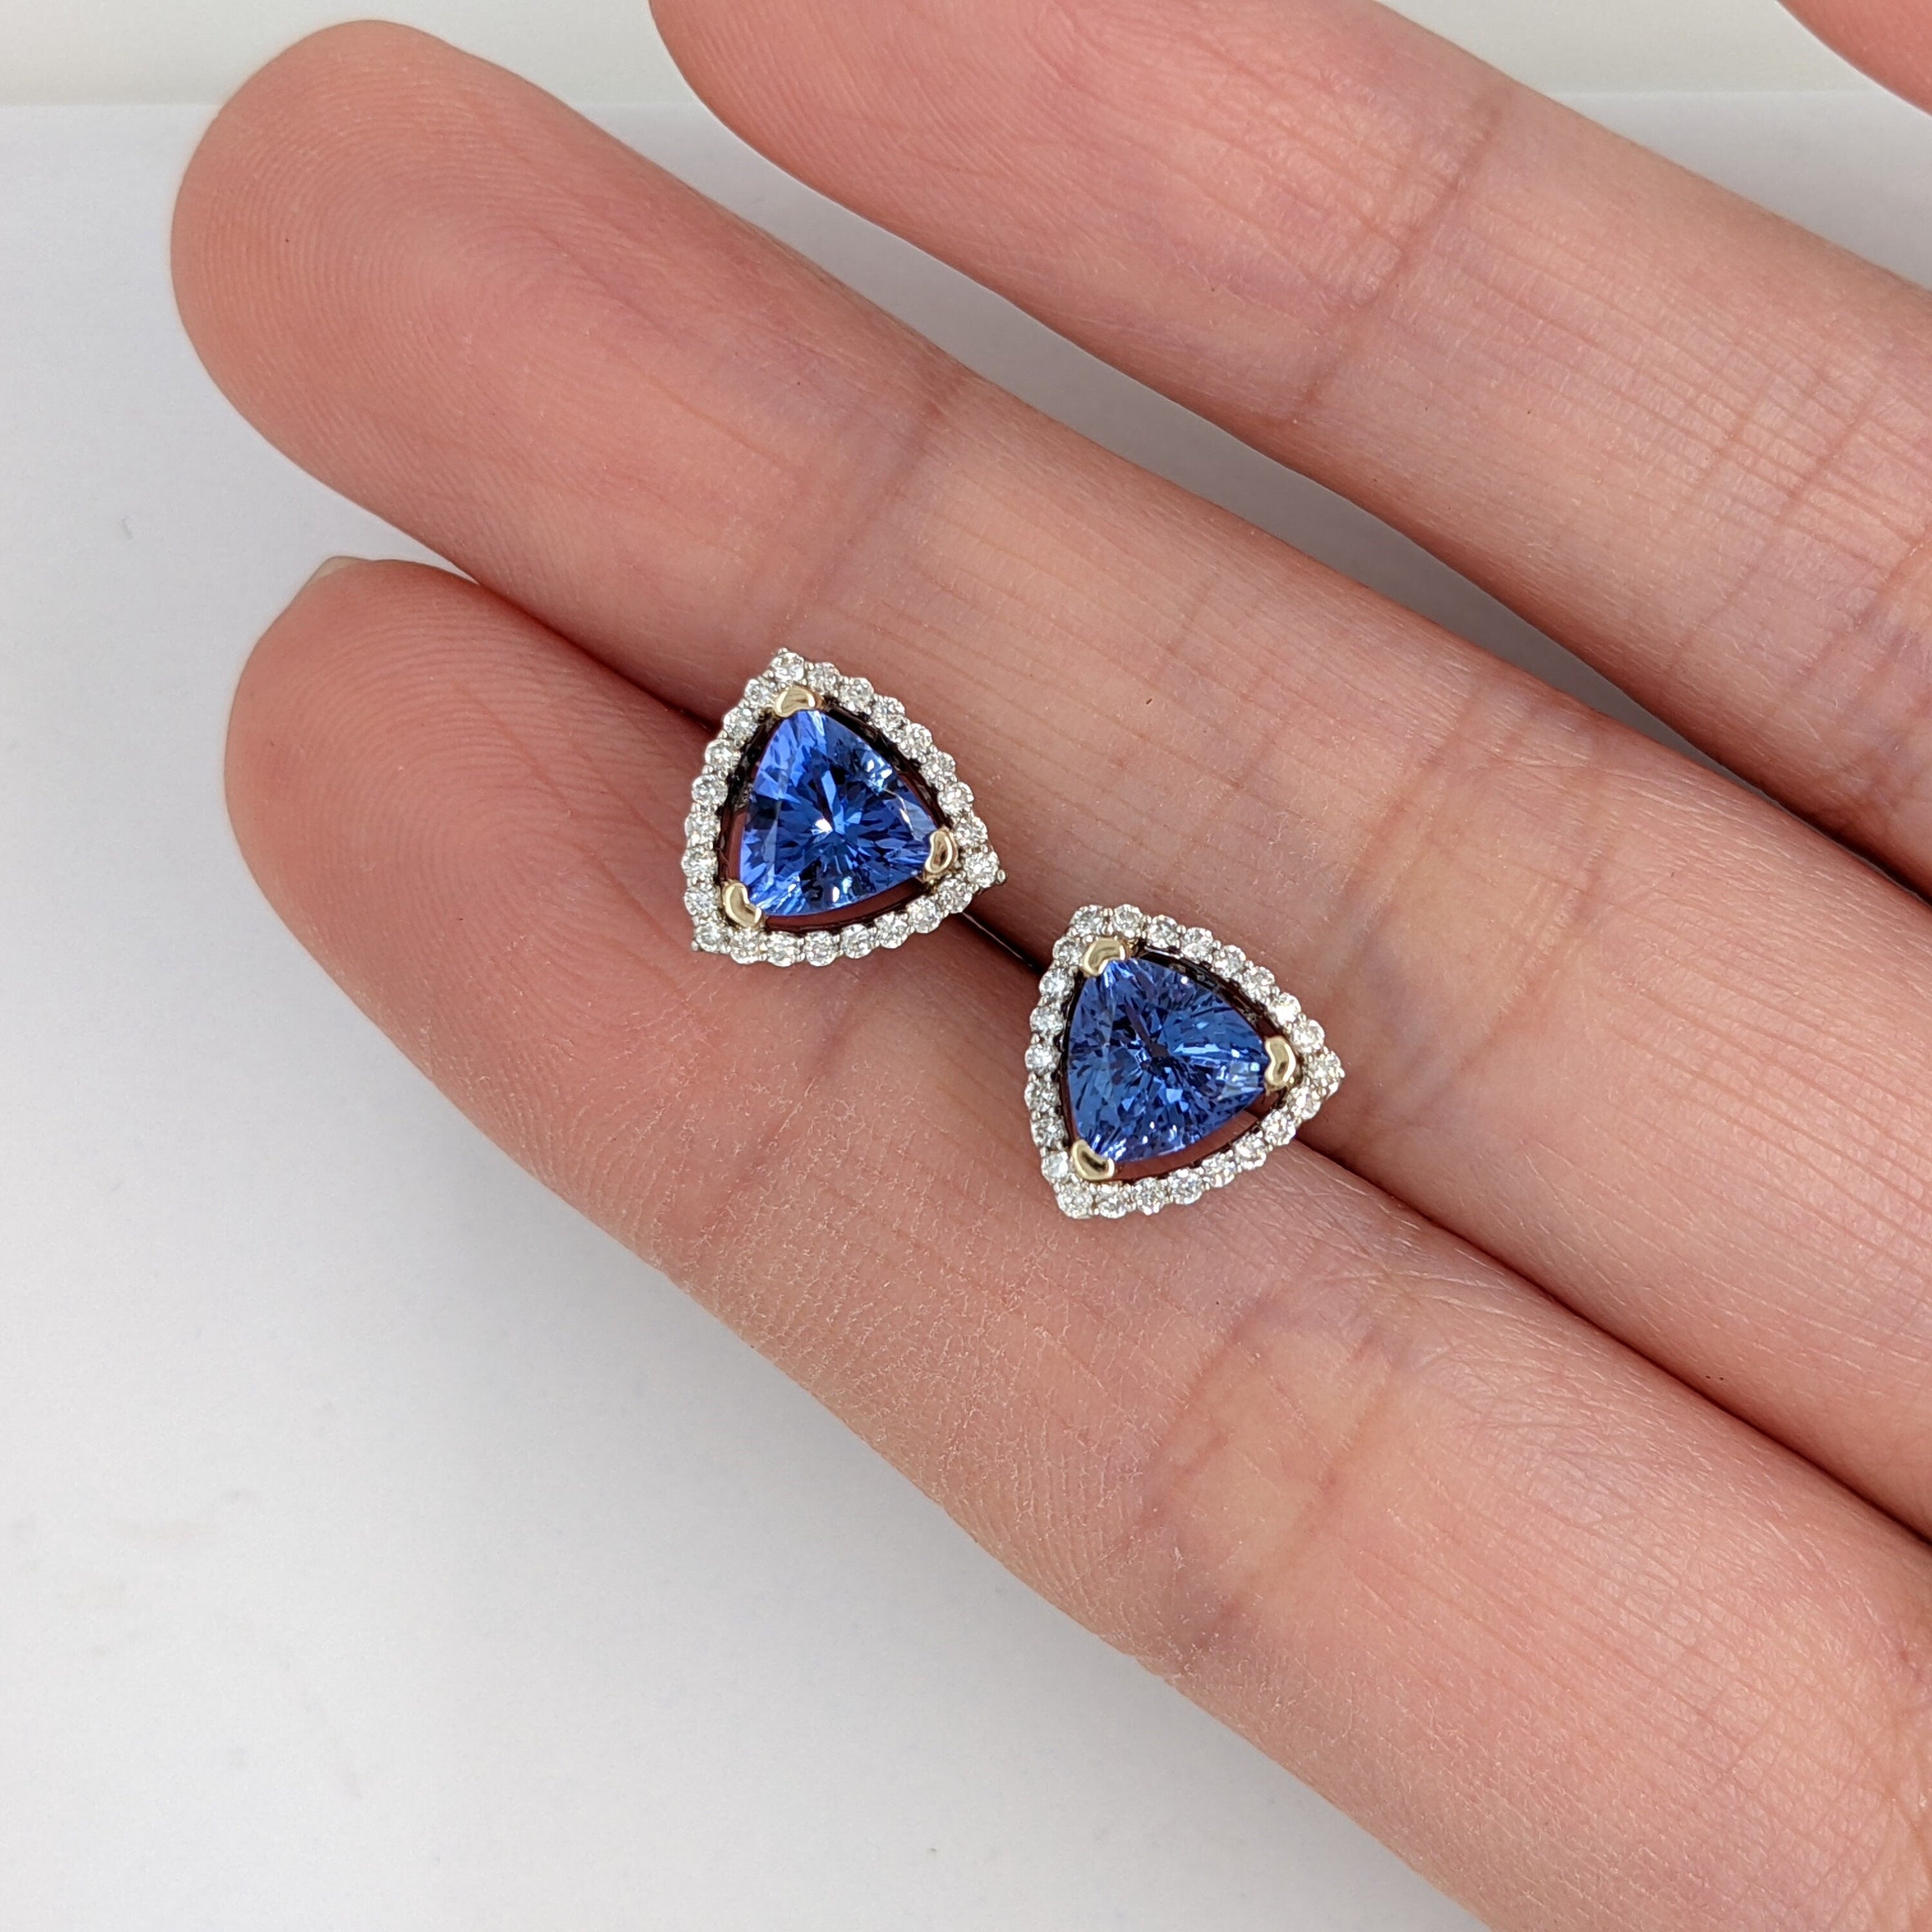 Gorgeous Genuine Tanzanite Earring in 14k Gold w Diamond Halo | Trillion | December Birthstone | Secure Push Backs | Blue Gemstone Studs